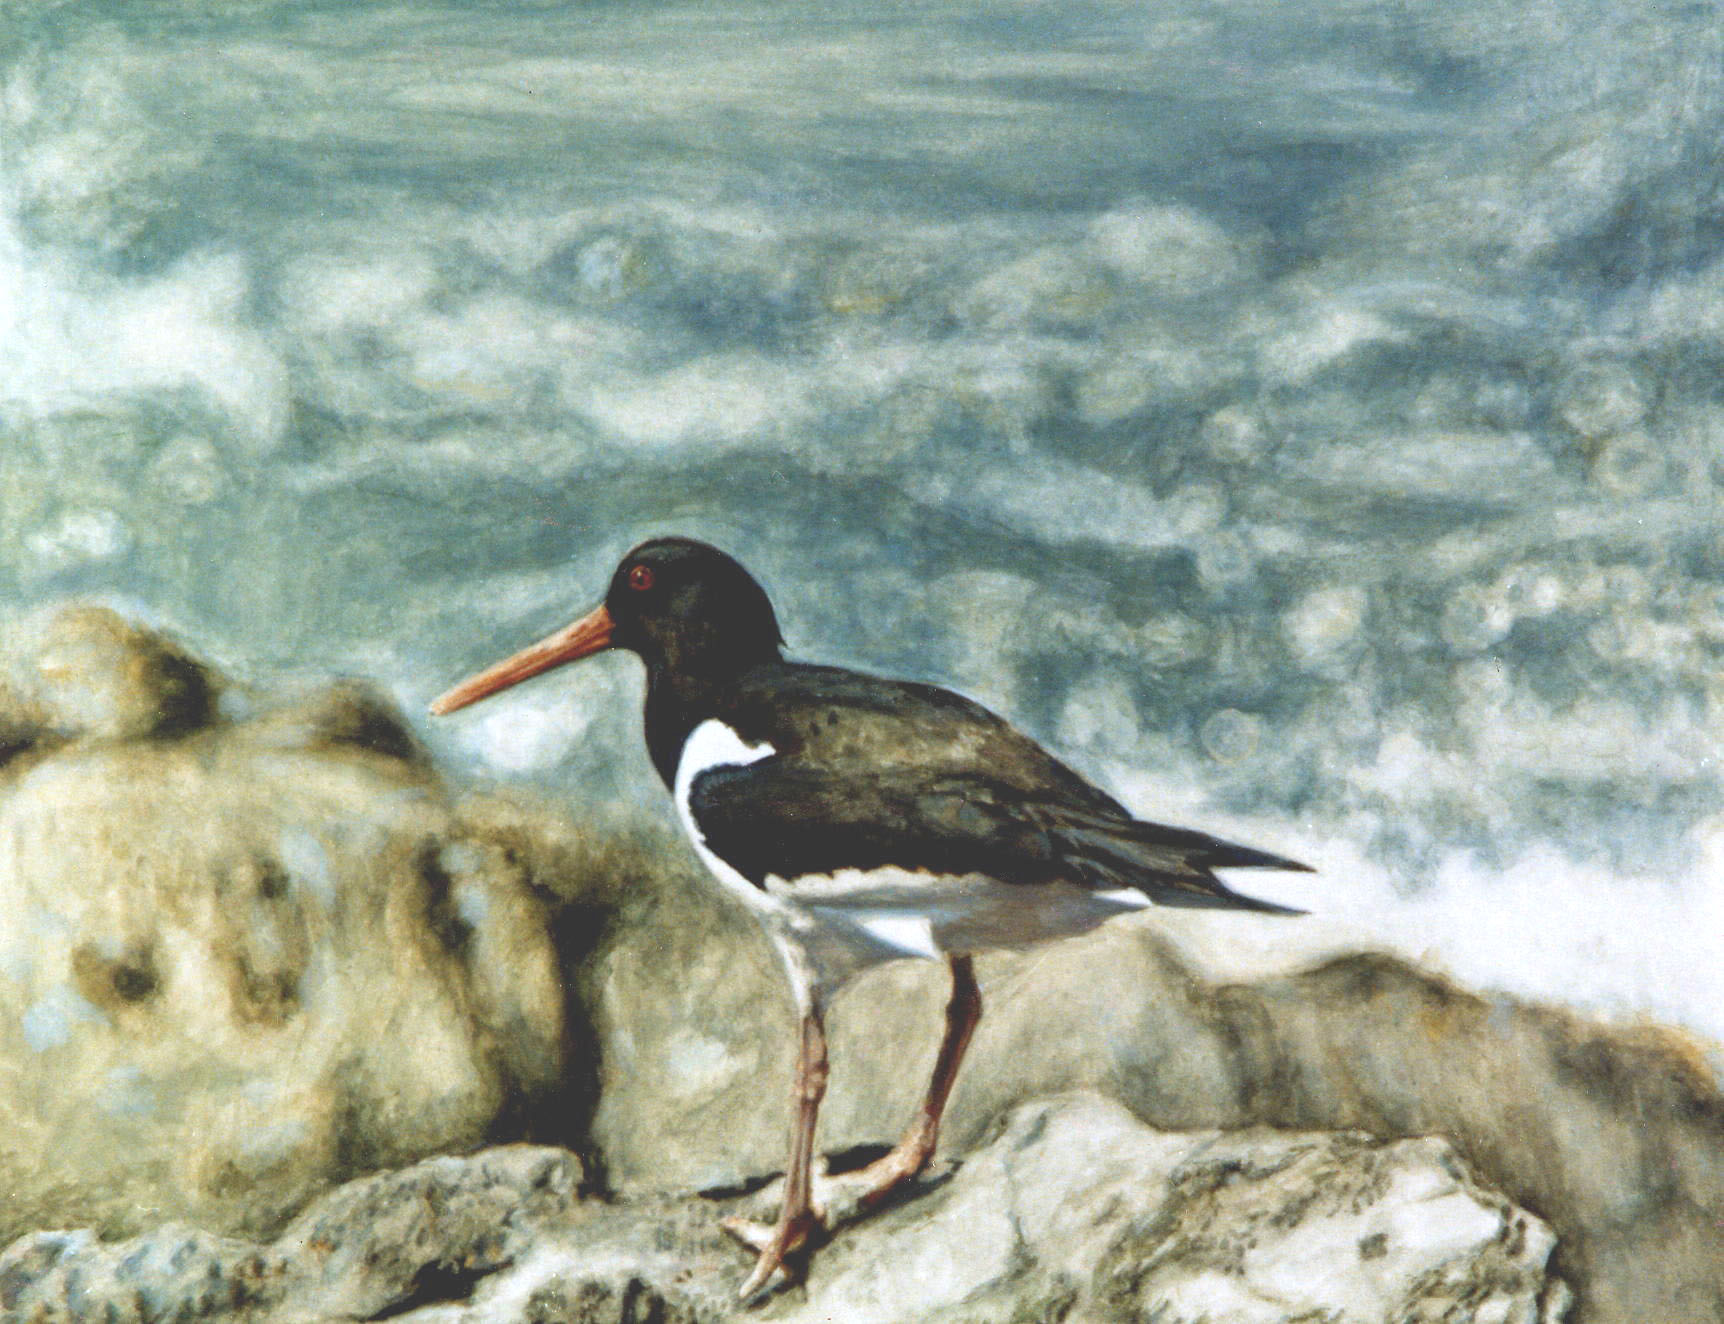 Back to: Oystercatcher - photorealism bird painting